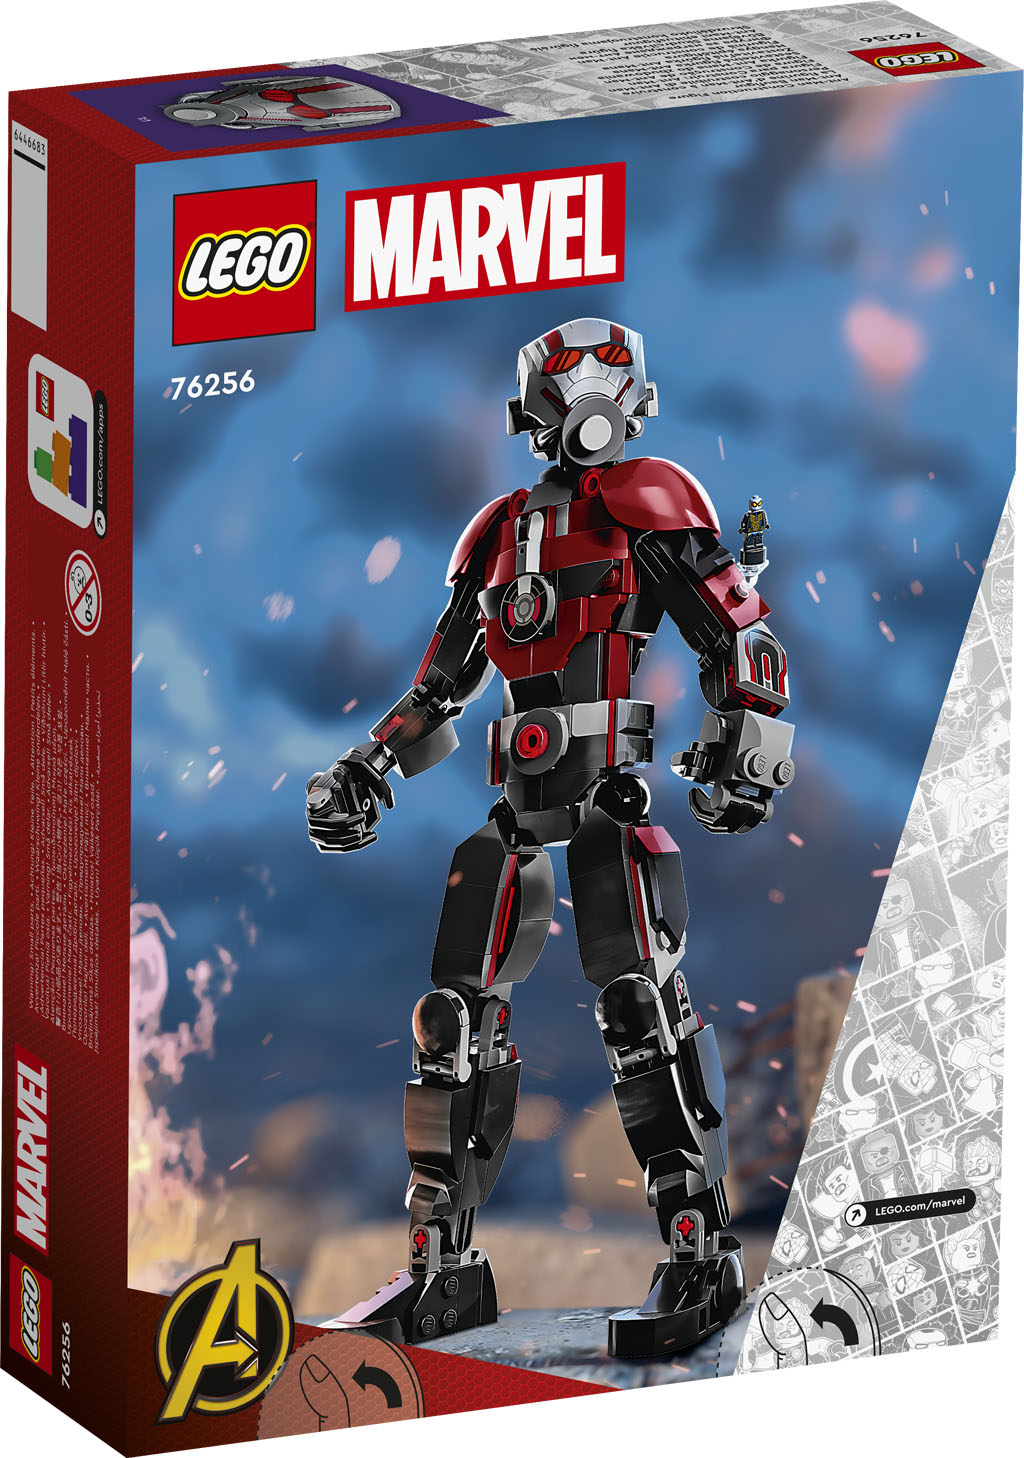 LEGO-Marvel-Ant-Man-Construction-Figure-76256-2